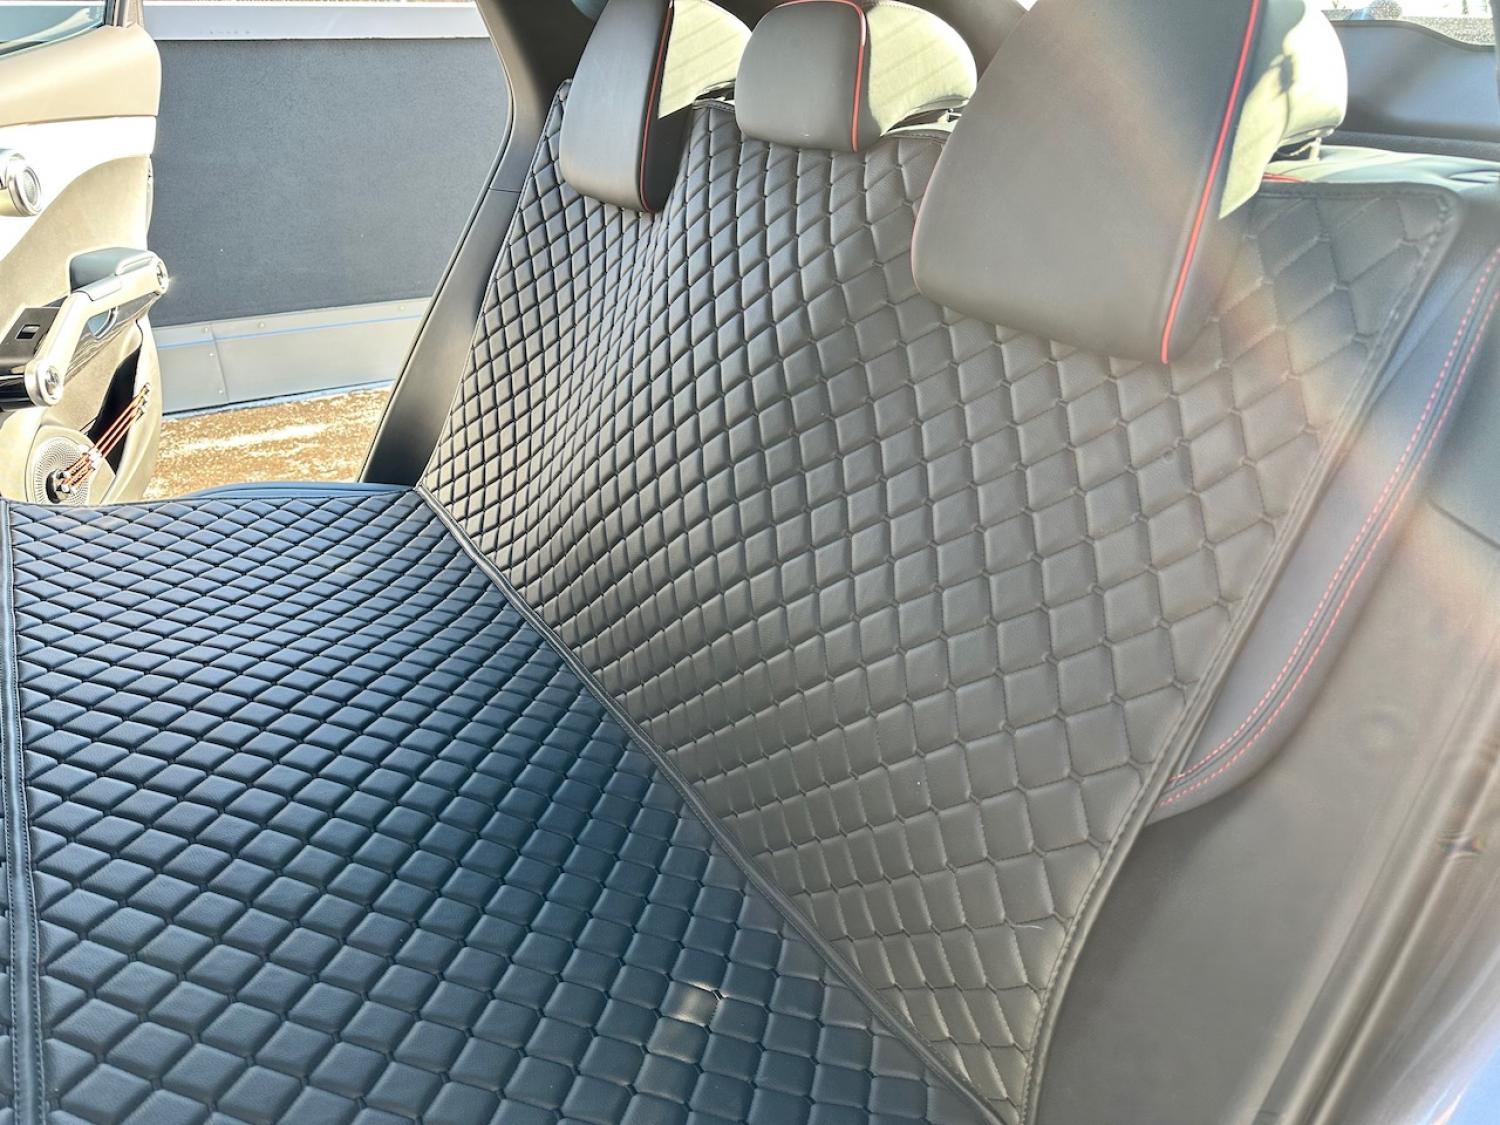 CARSTYLER® Back Seat Cover Geeignet Für Jaguar F-Pace X761, 2017-2020